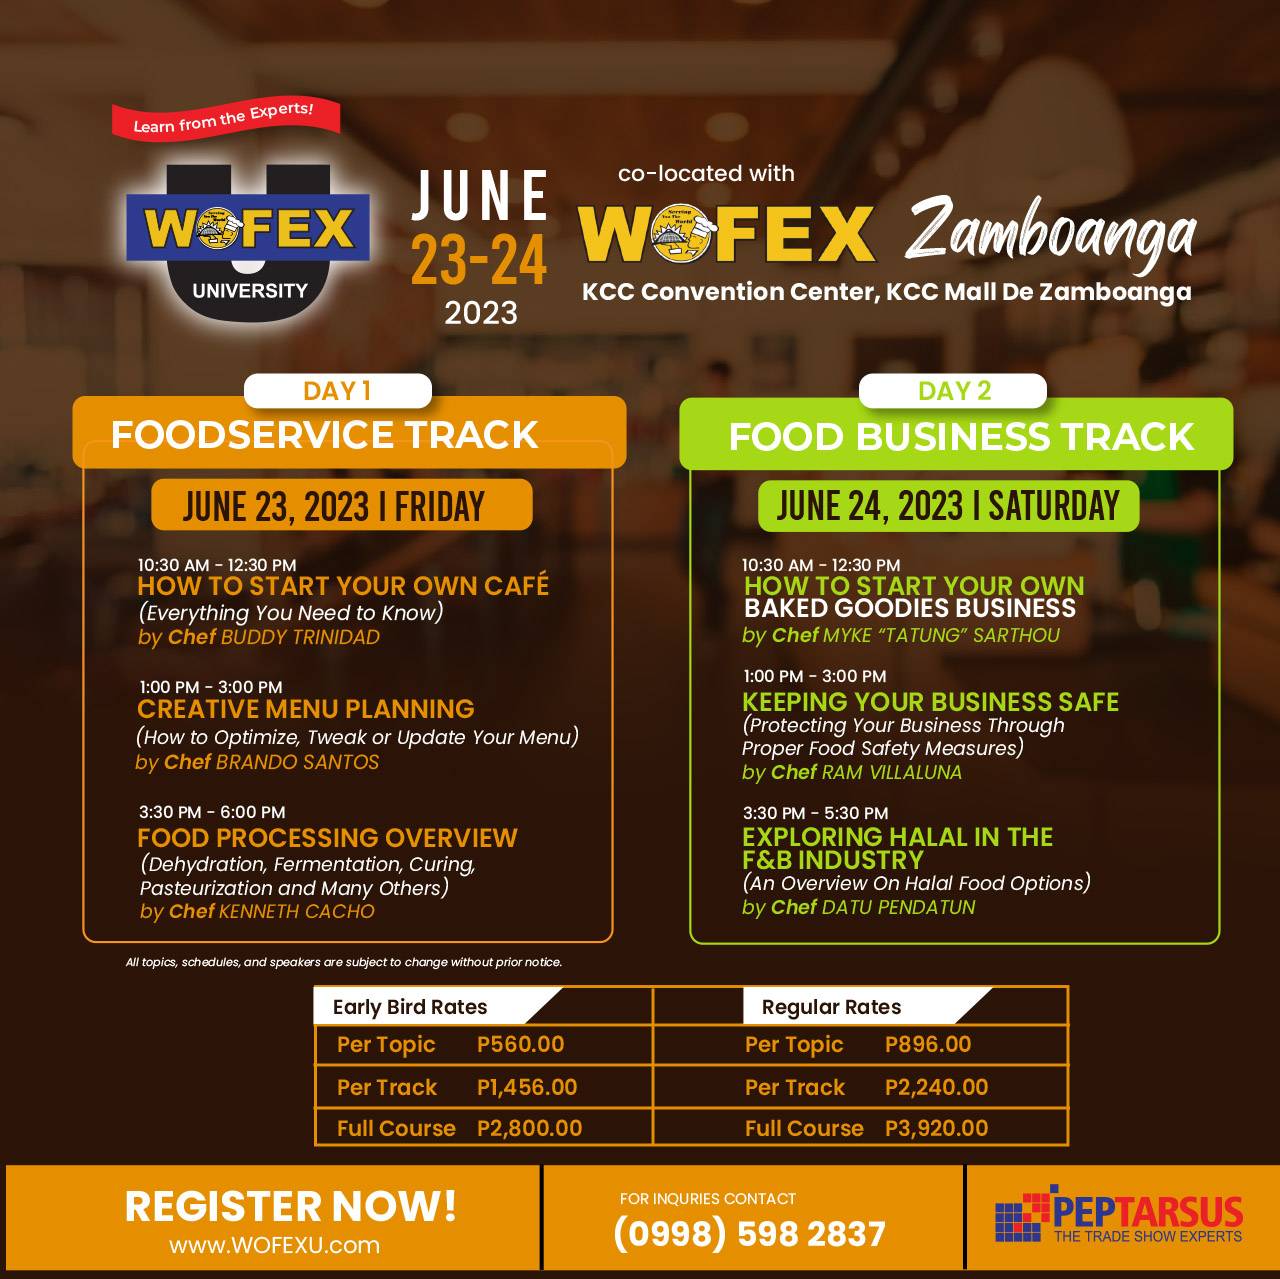 Foodservice and Food Business Tracks in Zamboanga!